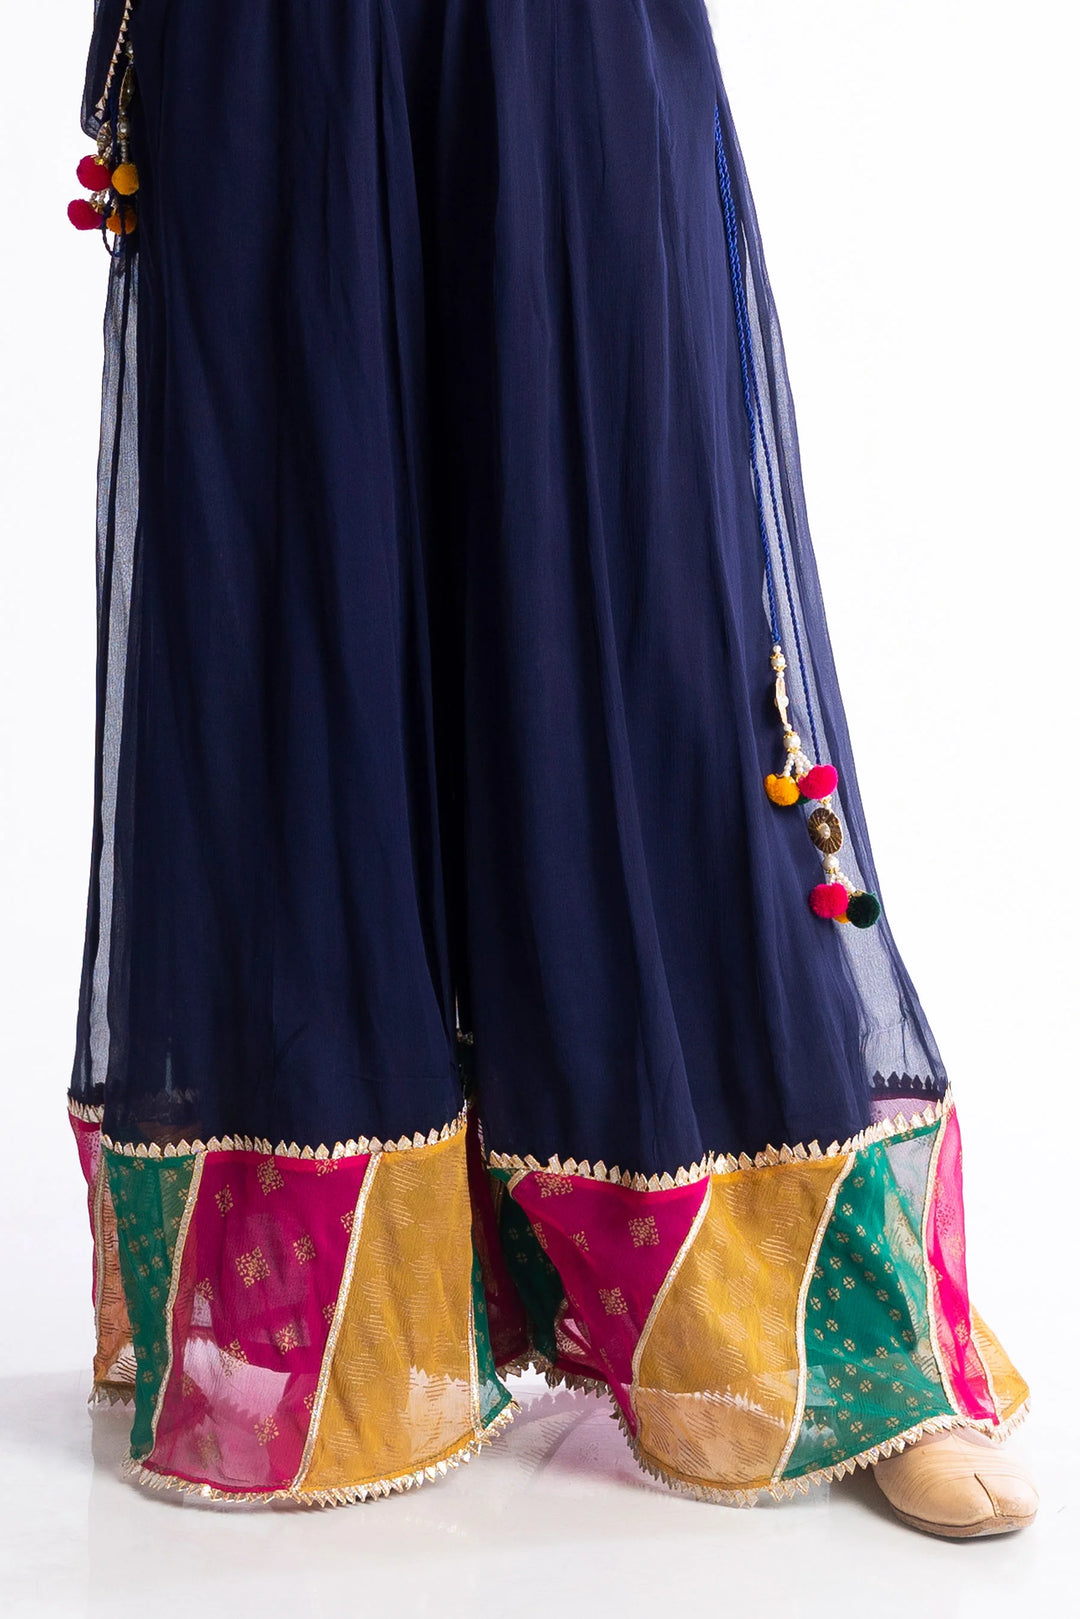 Multi Diagonal Traditional Clothing Pakistan